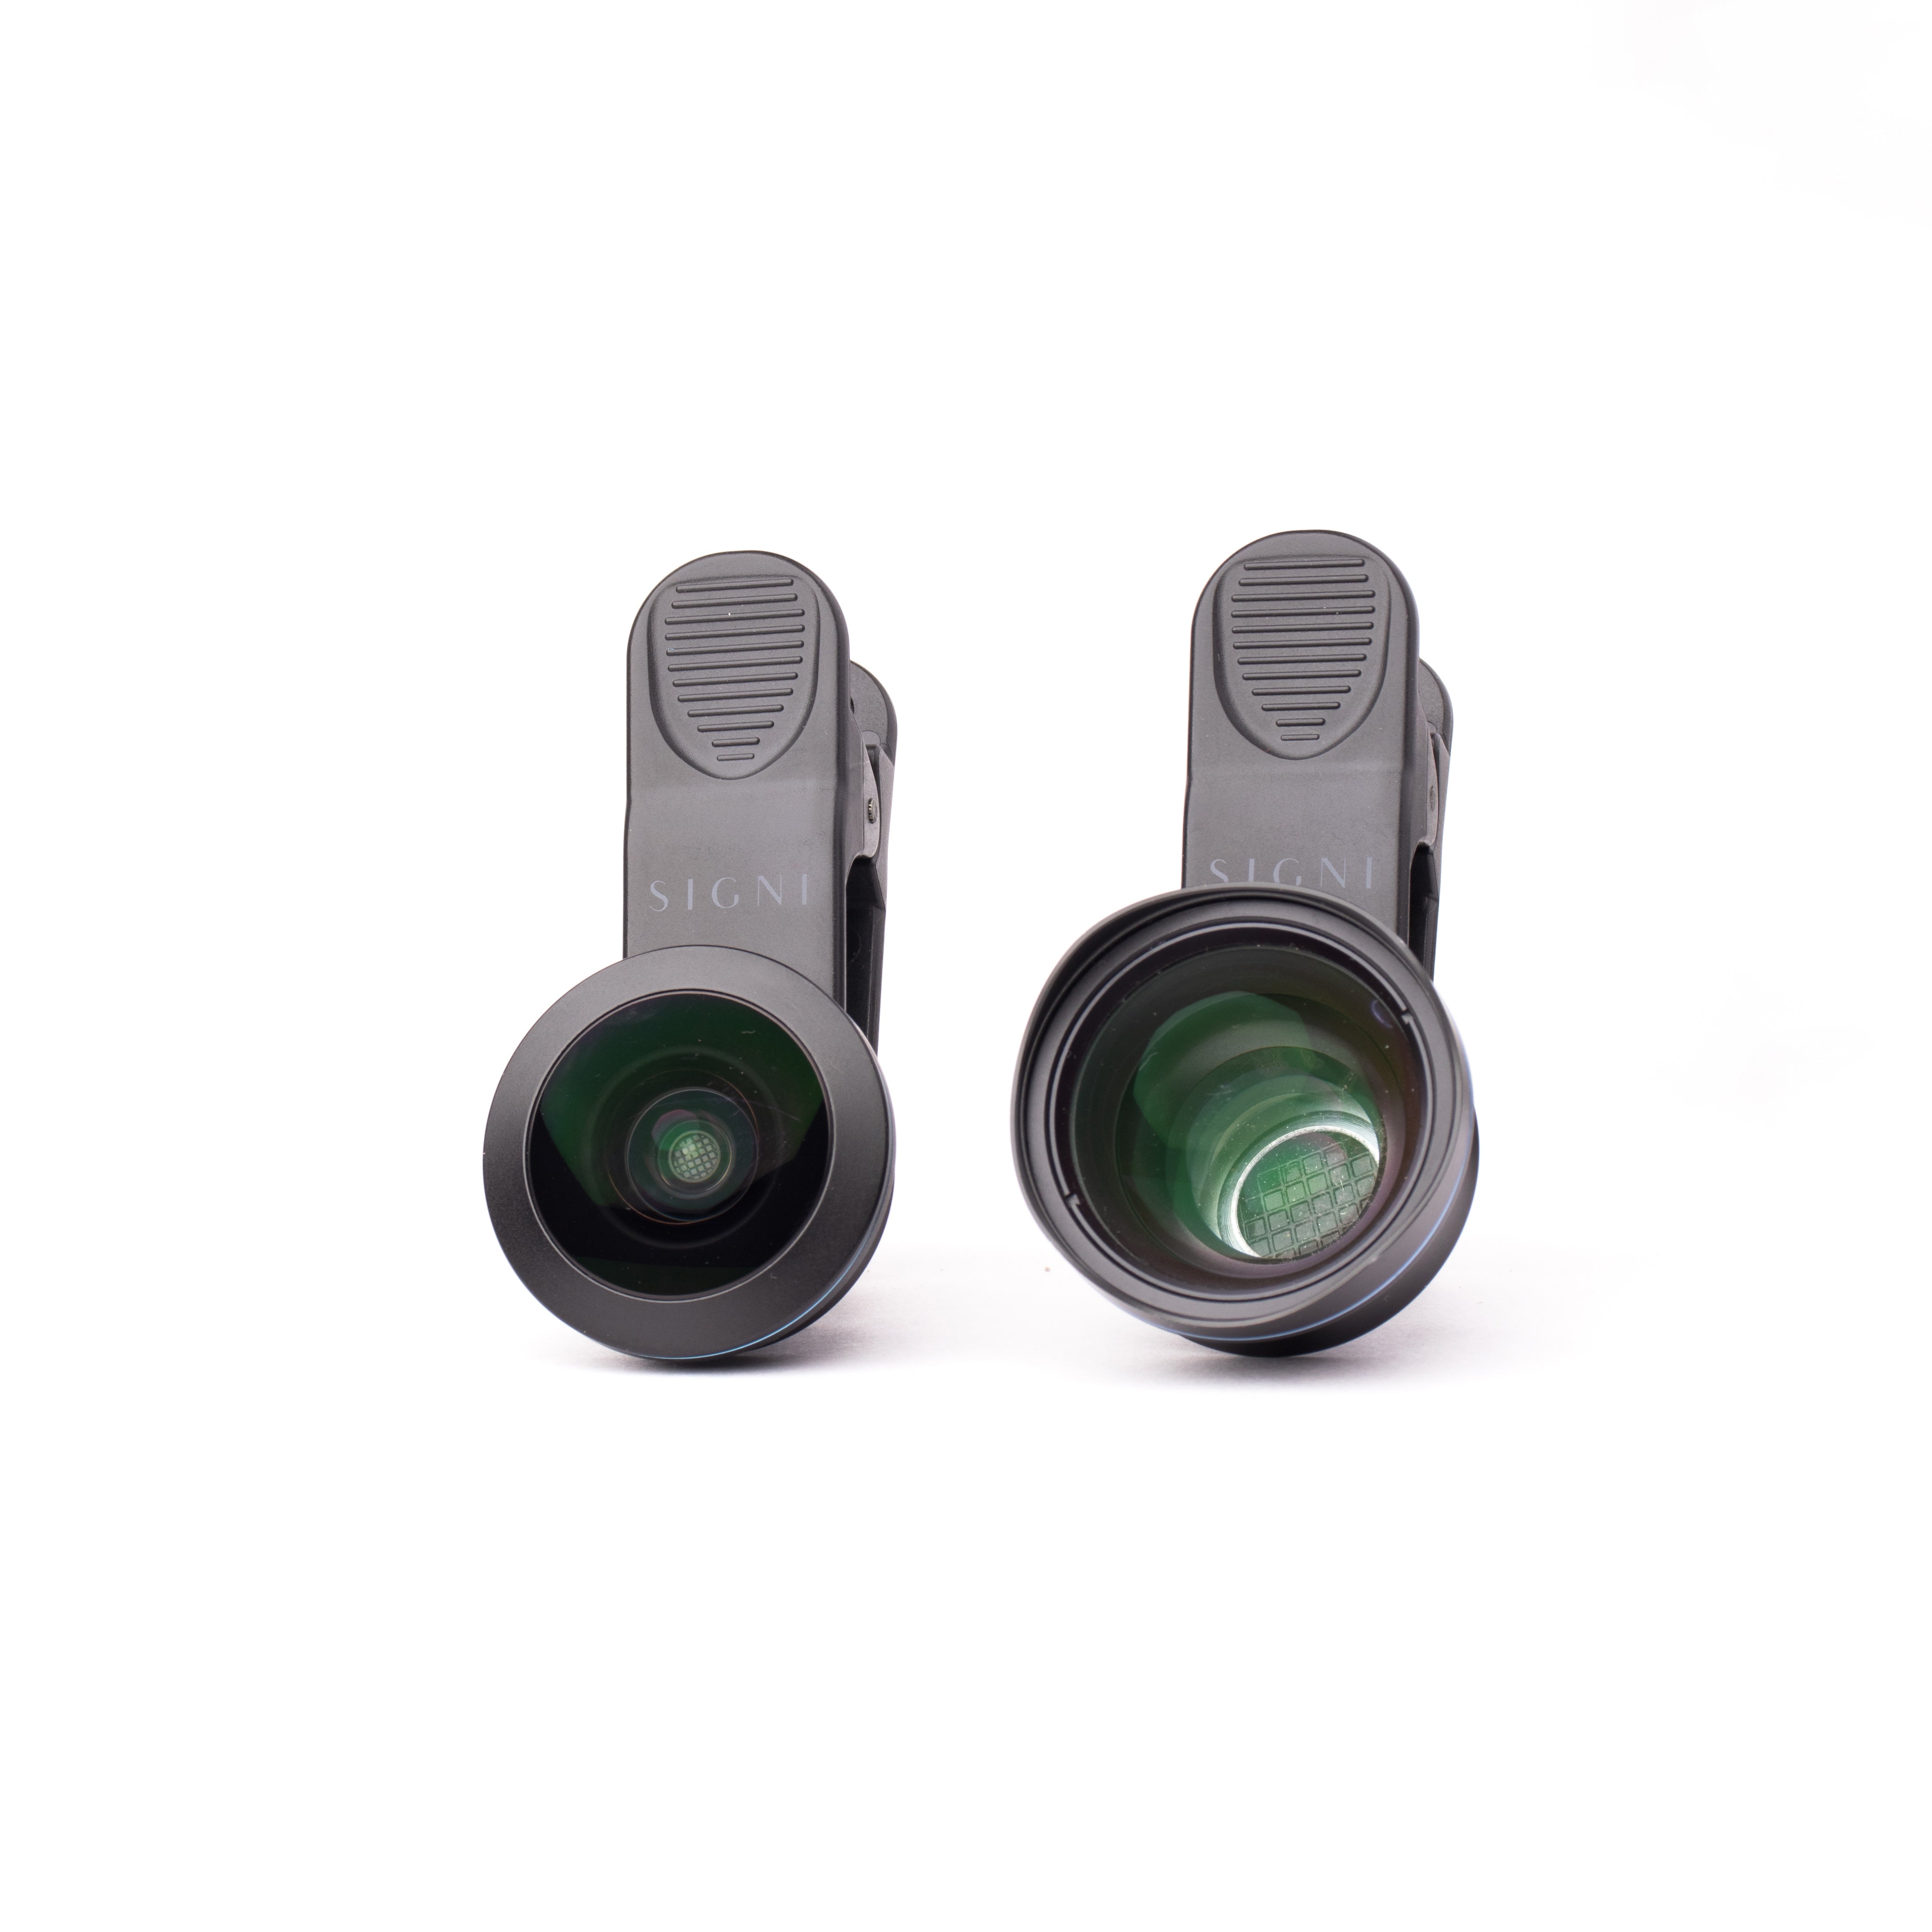 SIGNI One Combo Lens Kit (10mm Fisheye + 60mm Telephoto)